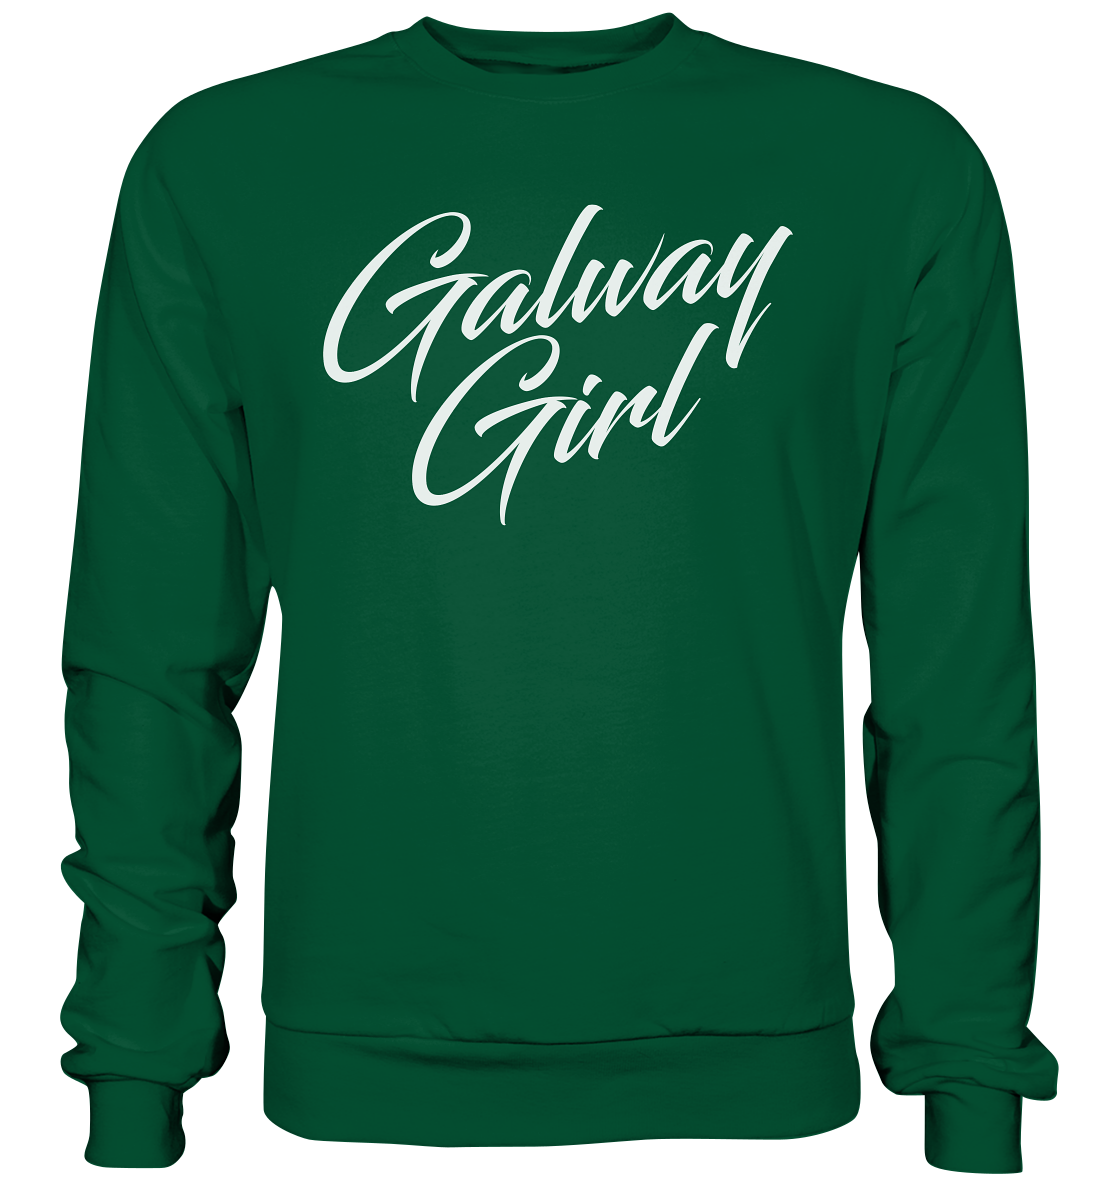 Galway Girl "Script" - Basic Sweatshirt